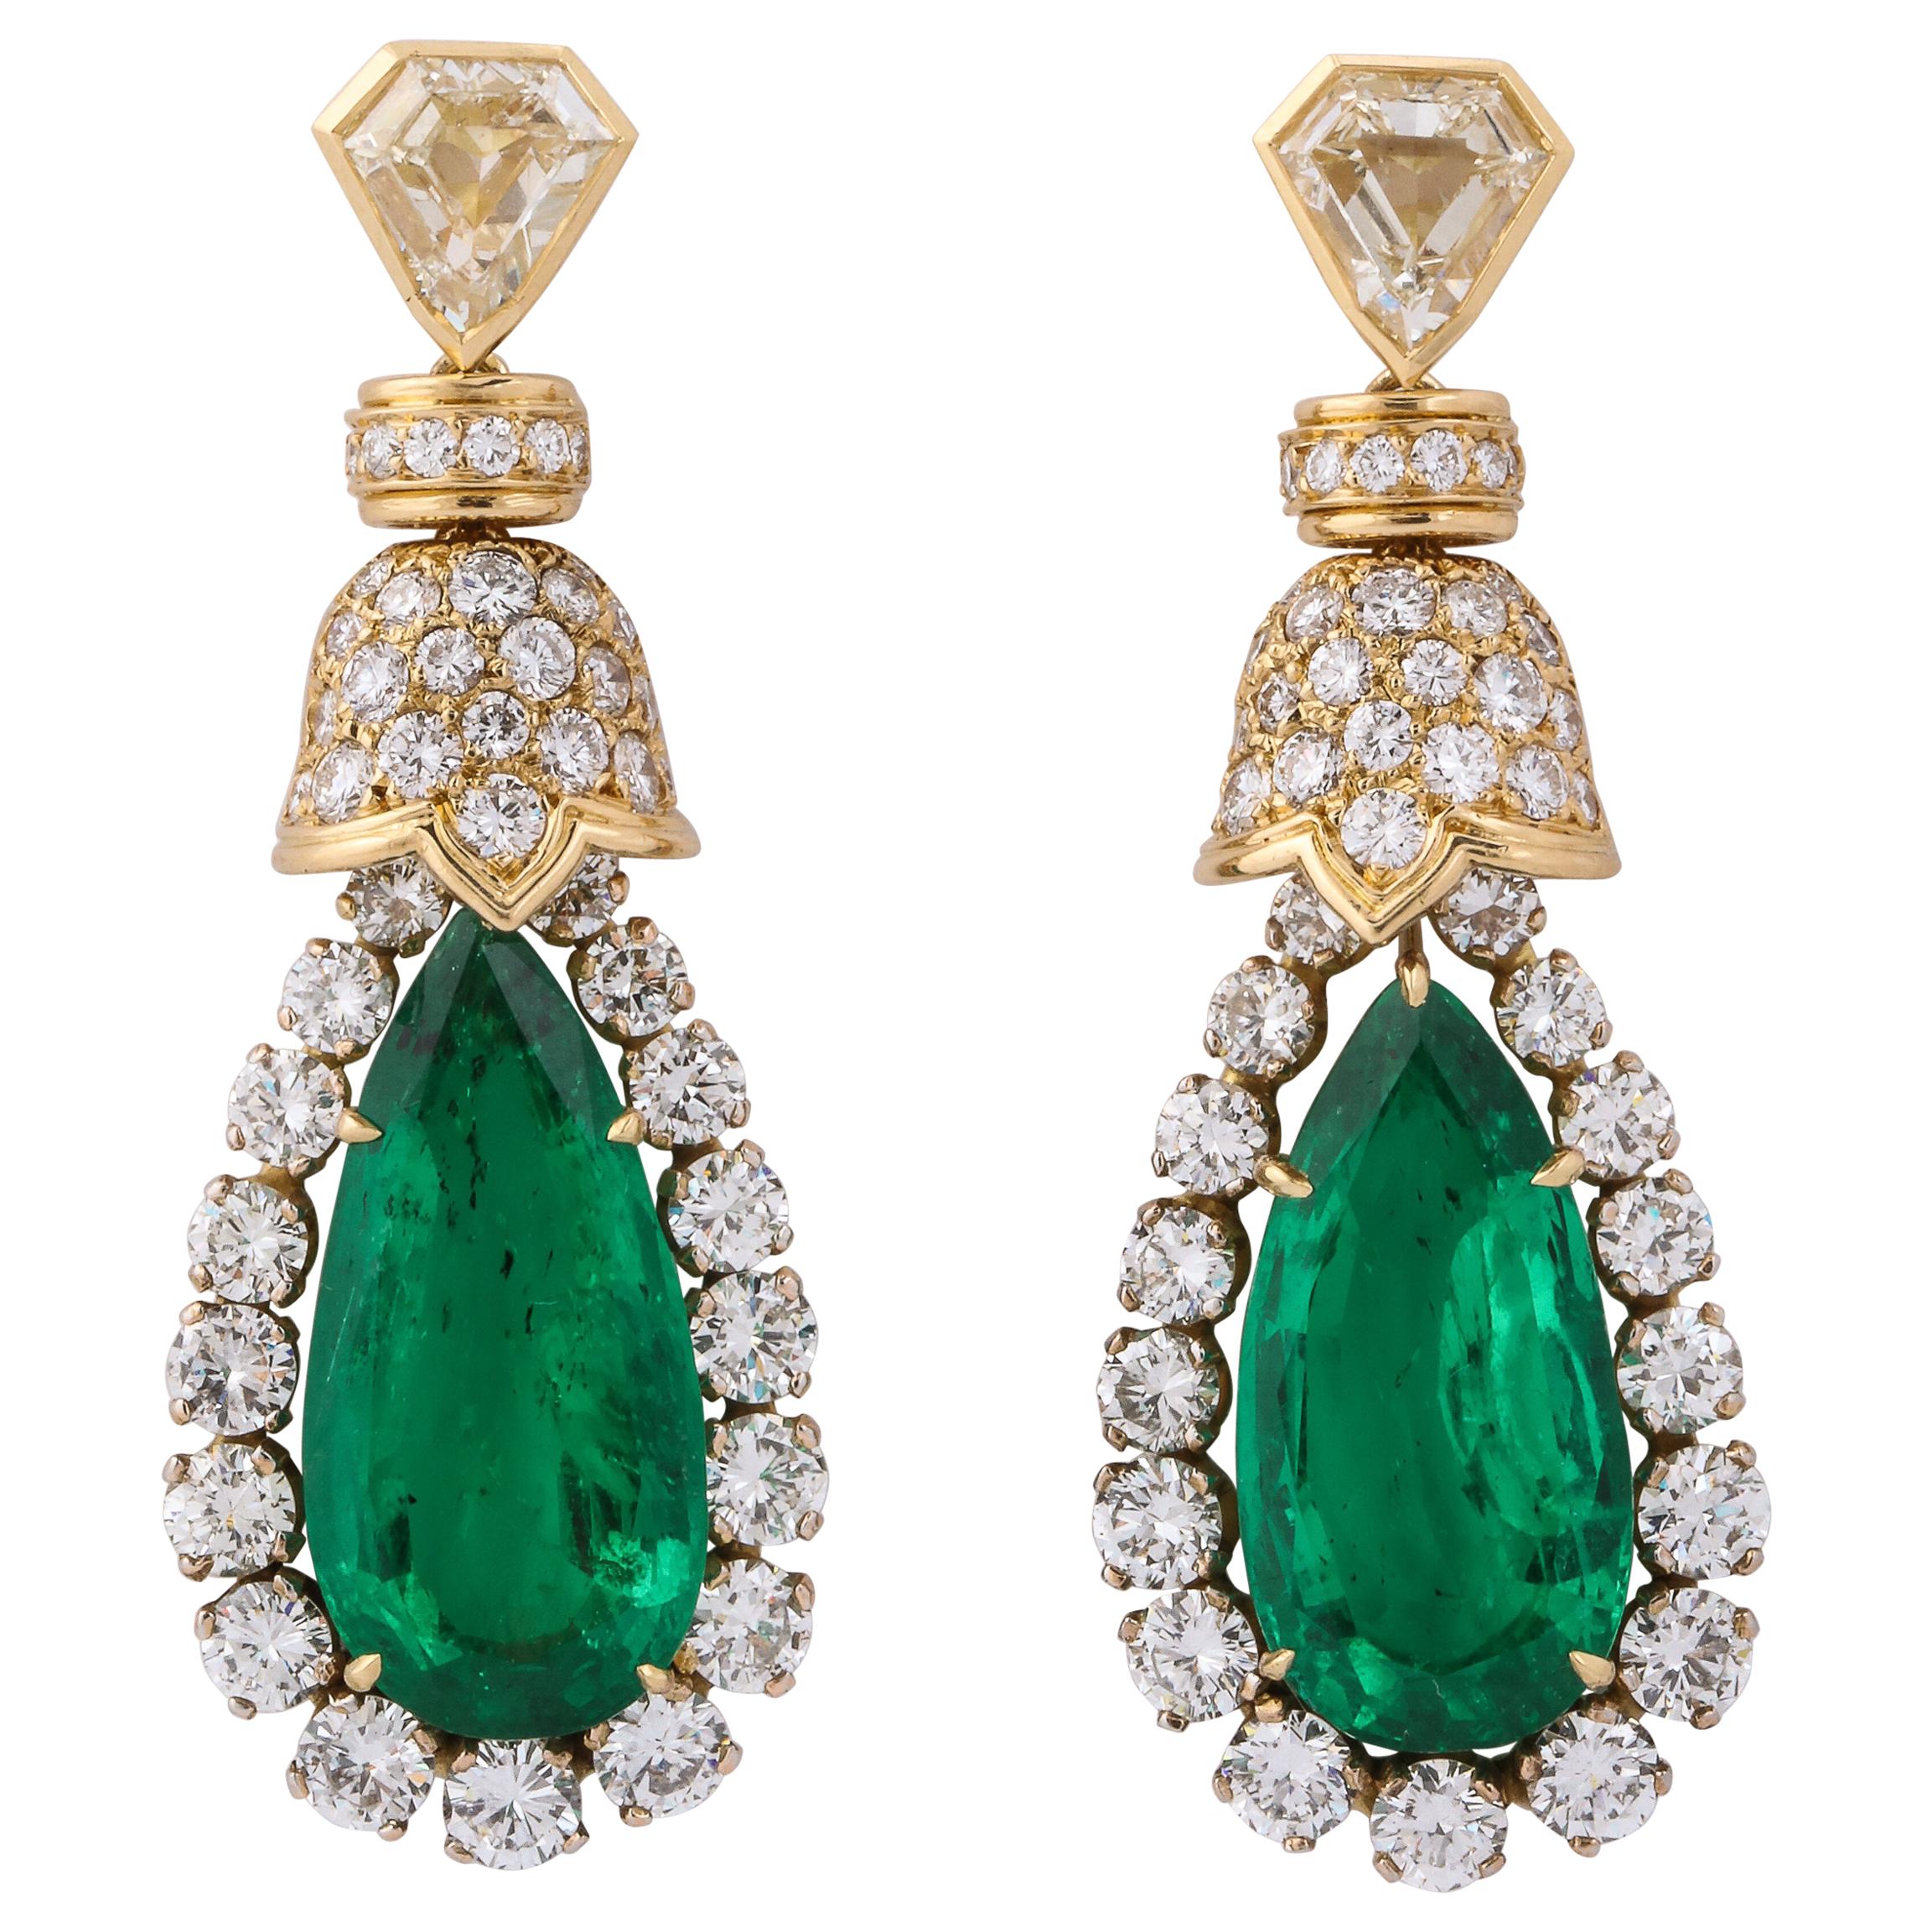 David Webb Pear Shaped Emerald Diamond Gold Earrings